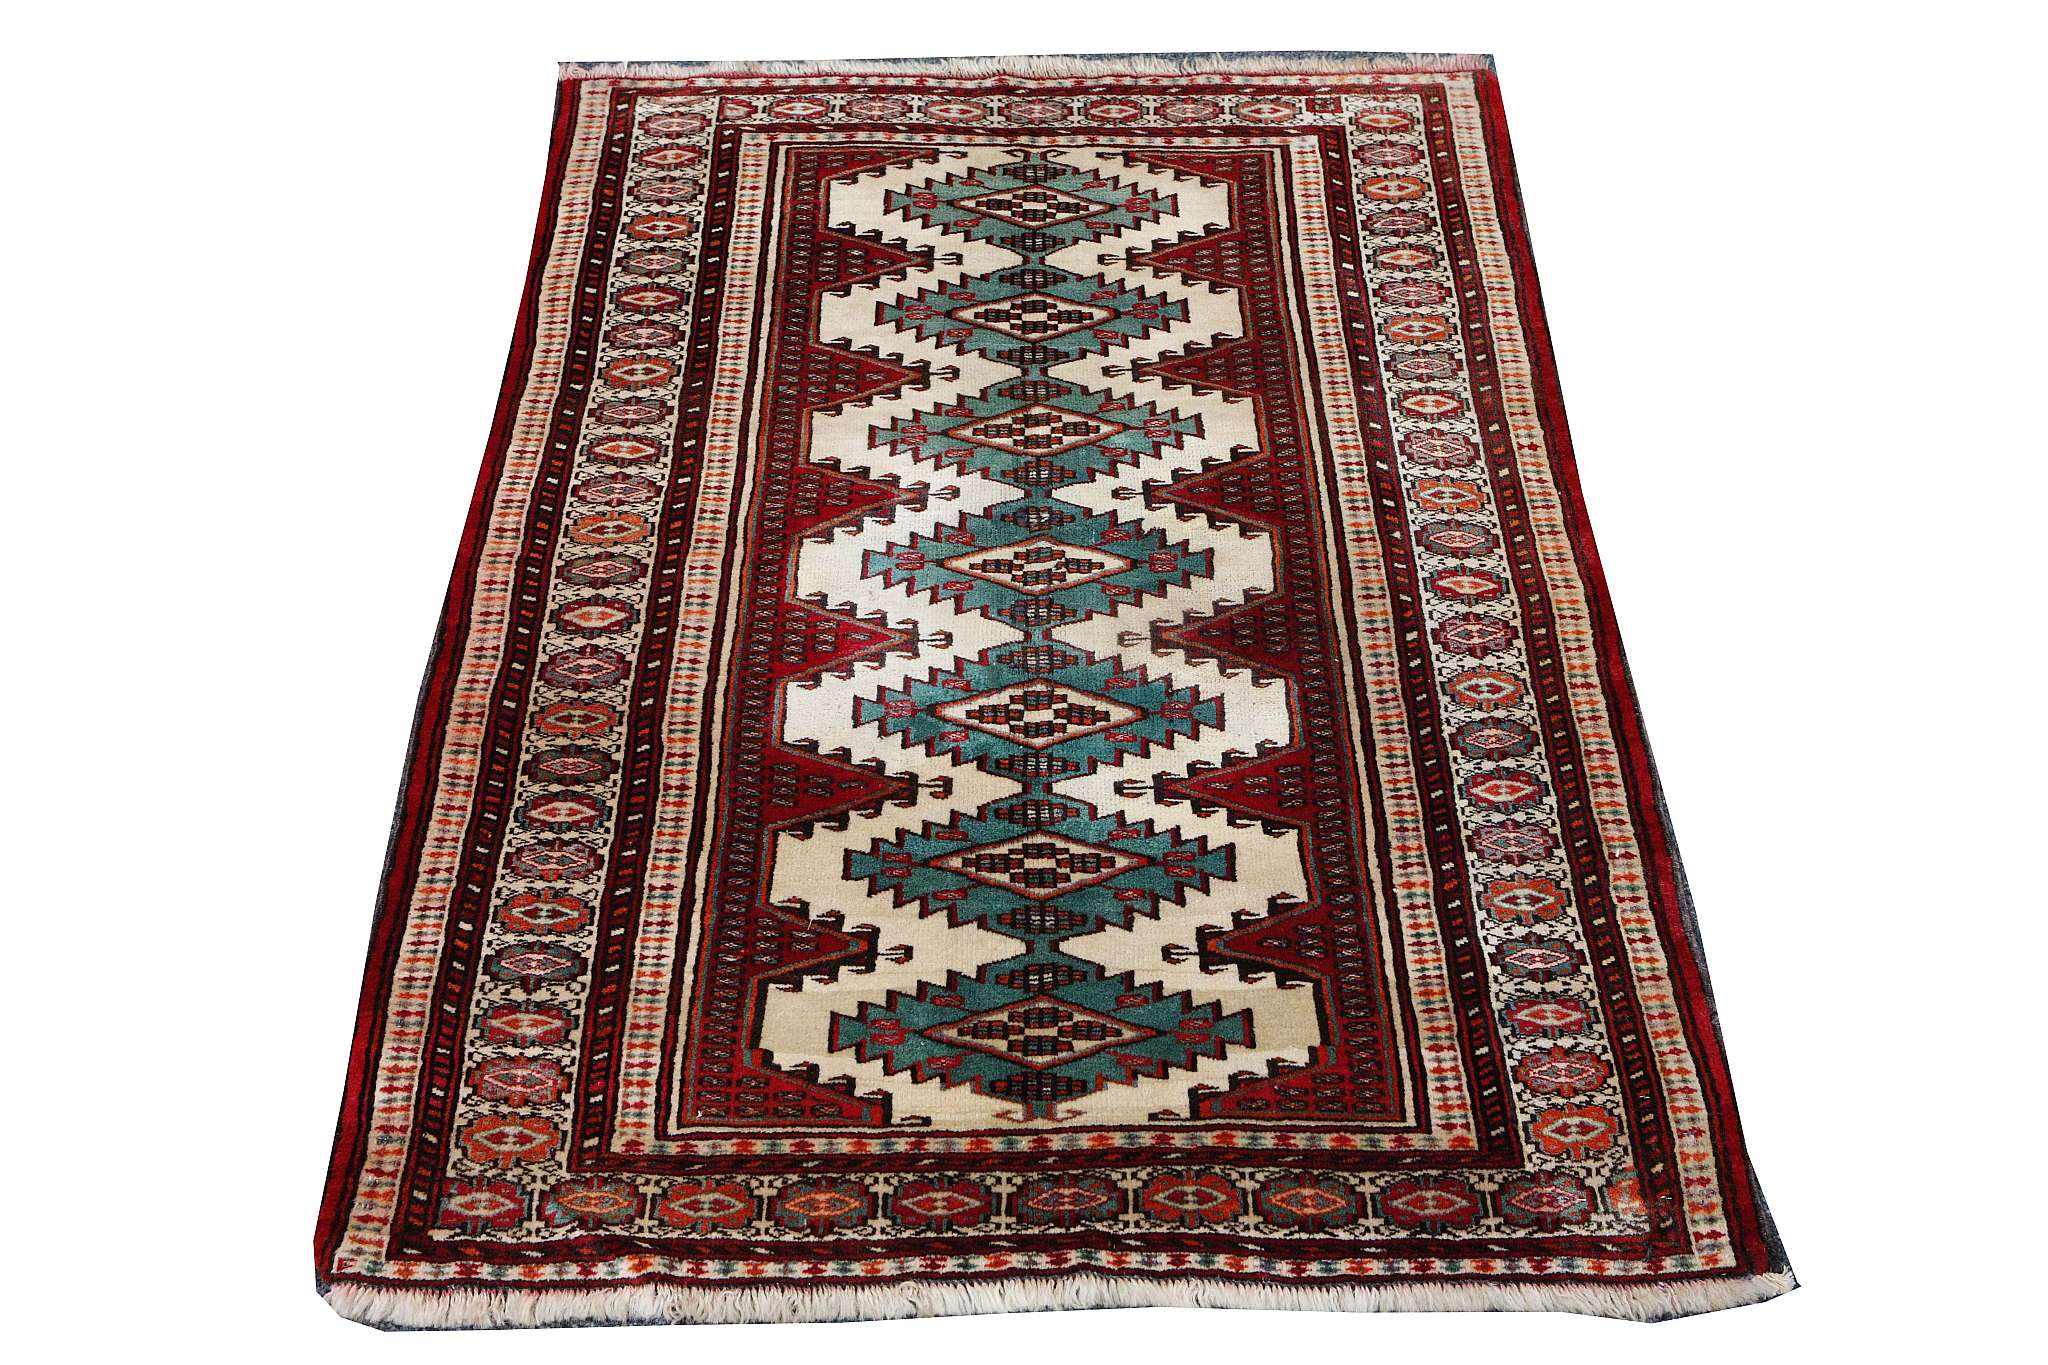 Persian Turkoman rug, 1.30m x 1.00m, condition rat